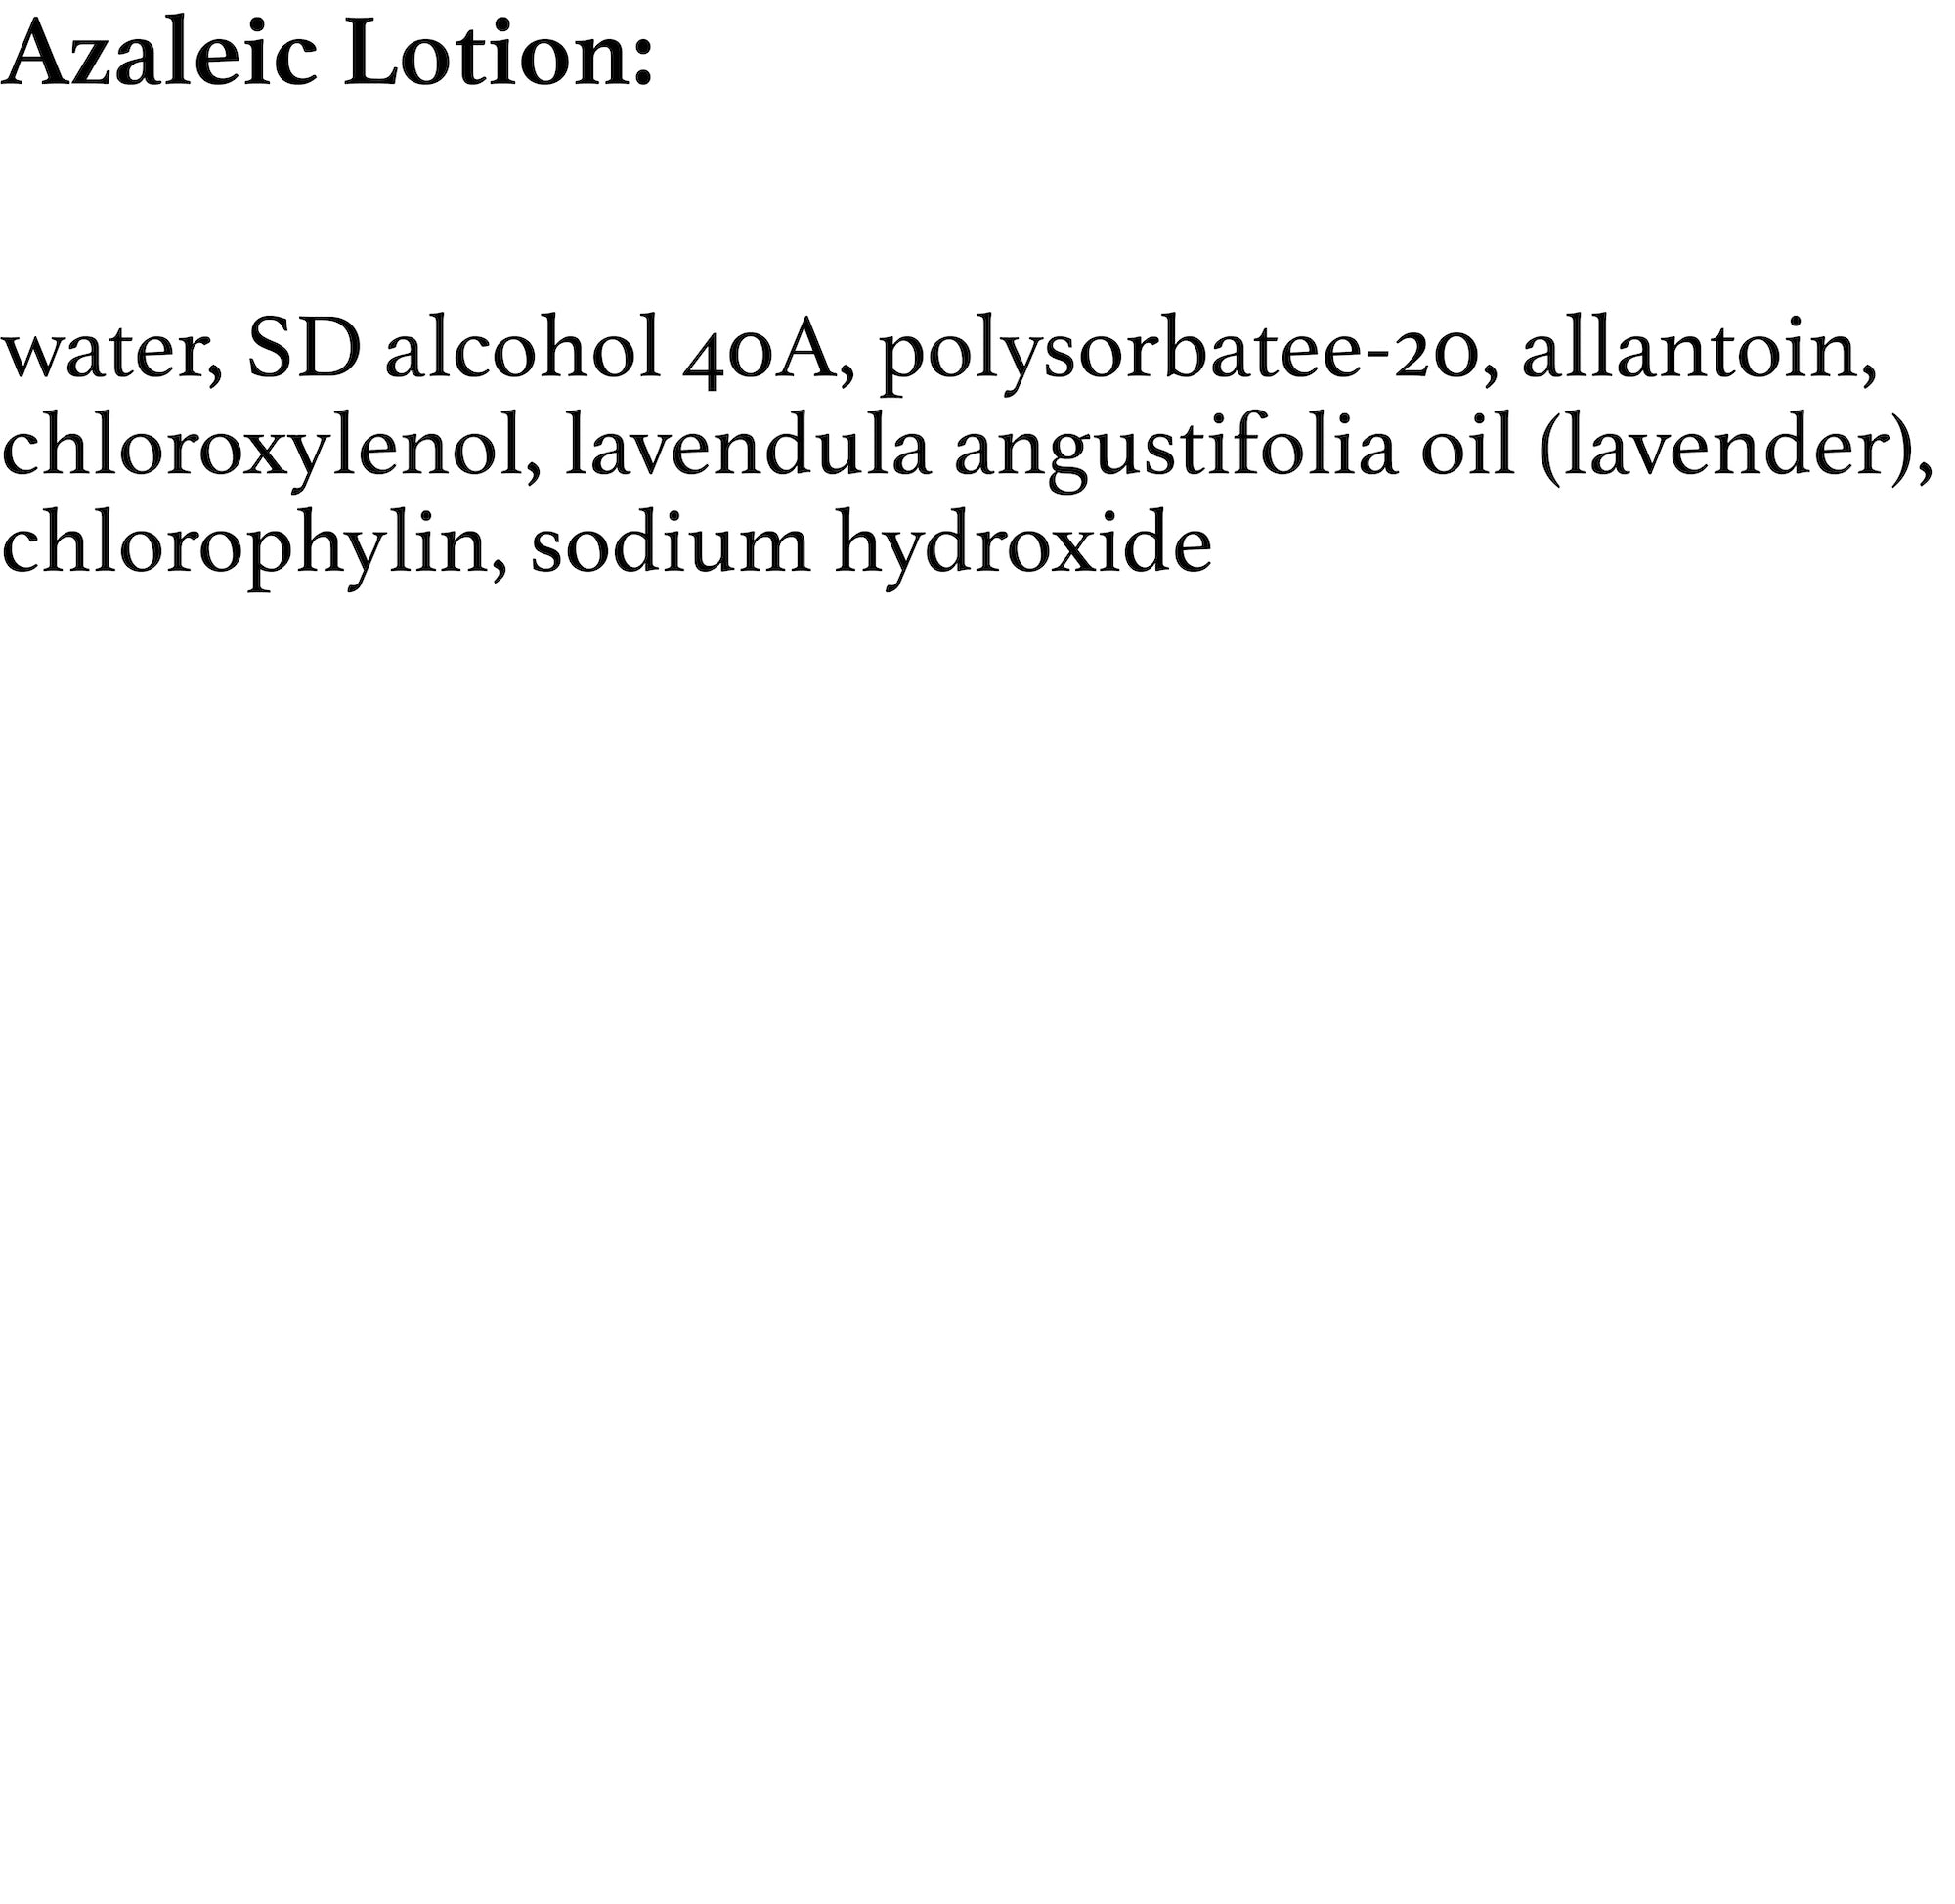 Azelaic Lotion - 4 oz